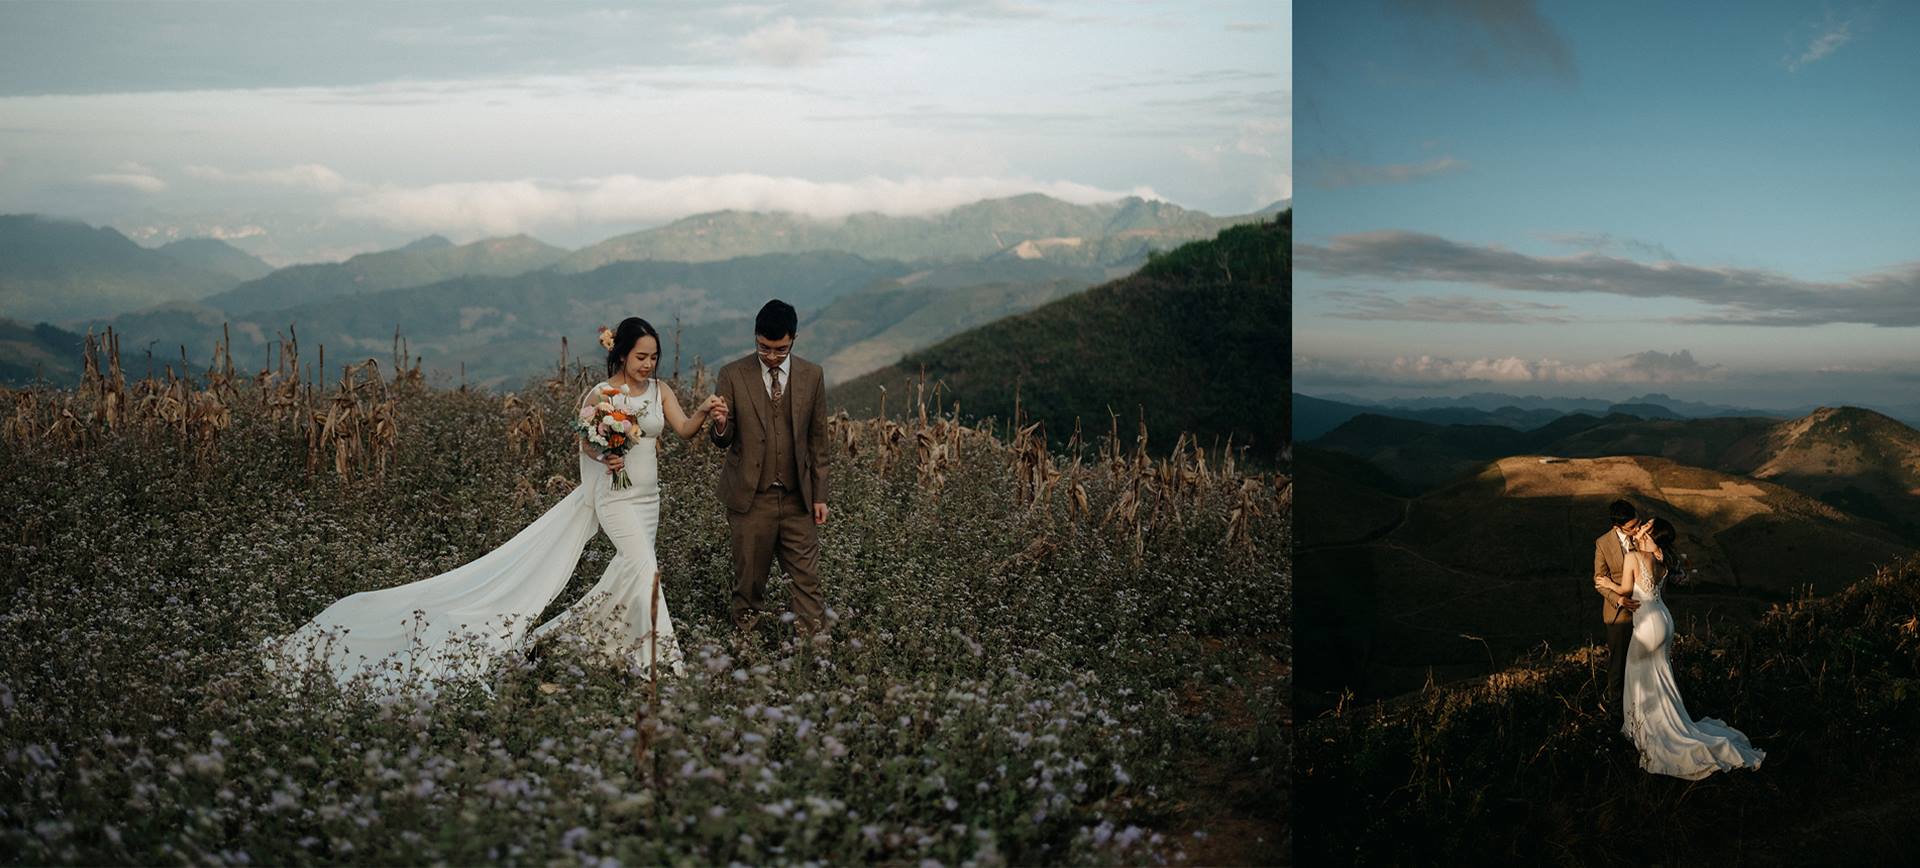 Elopement Wedding in the Mountains of Vietnam